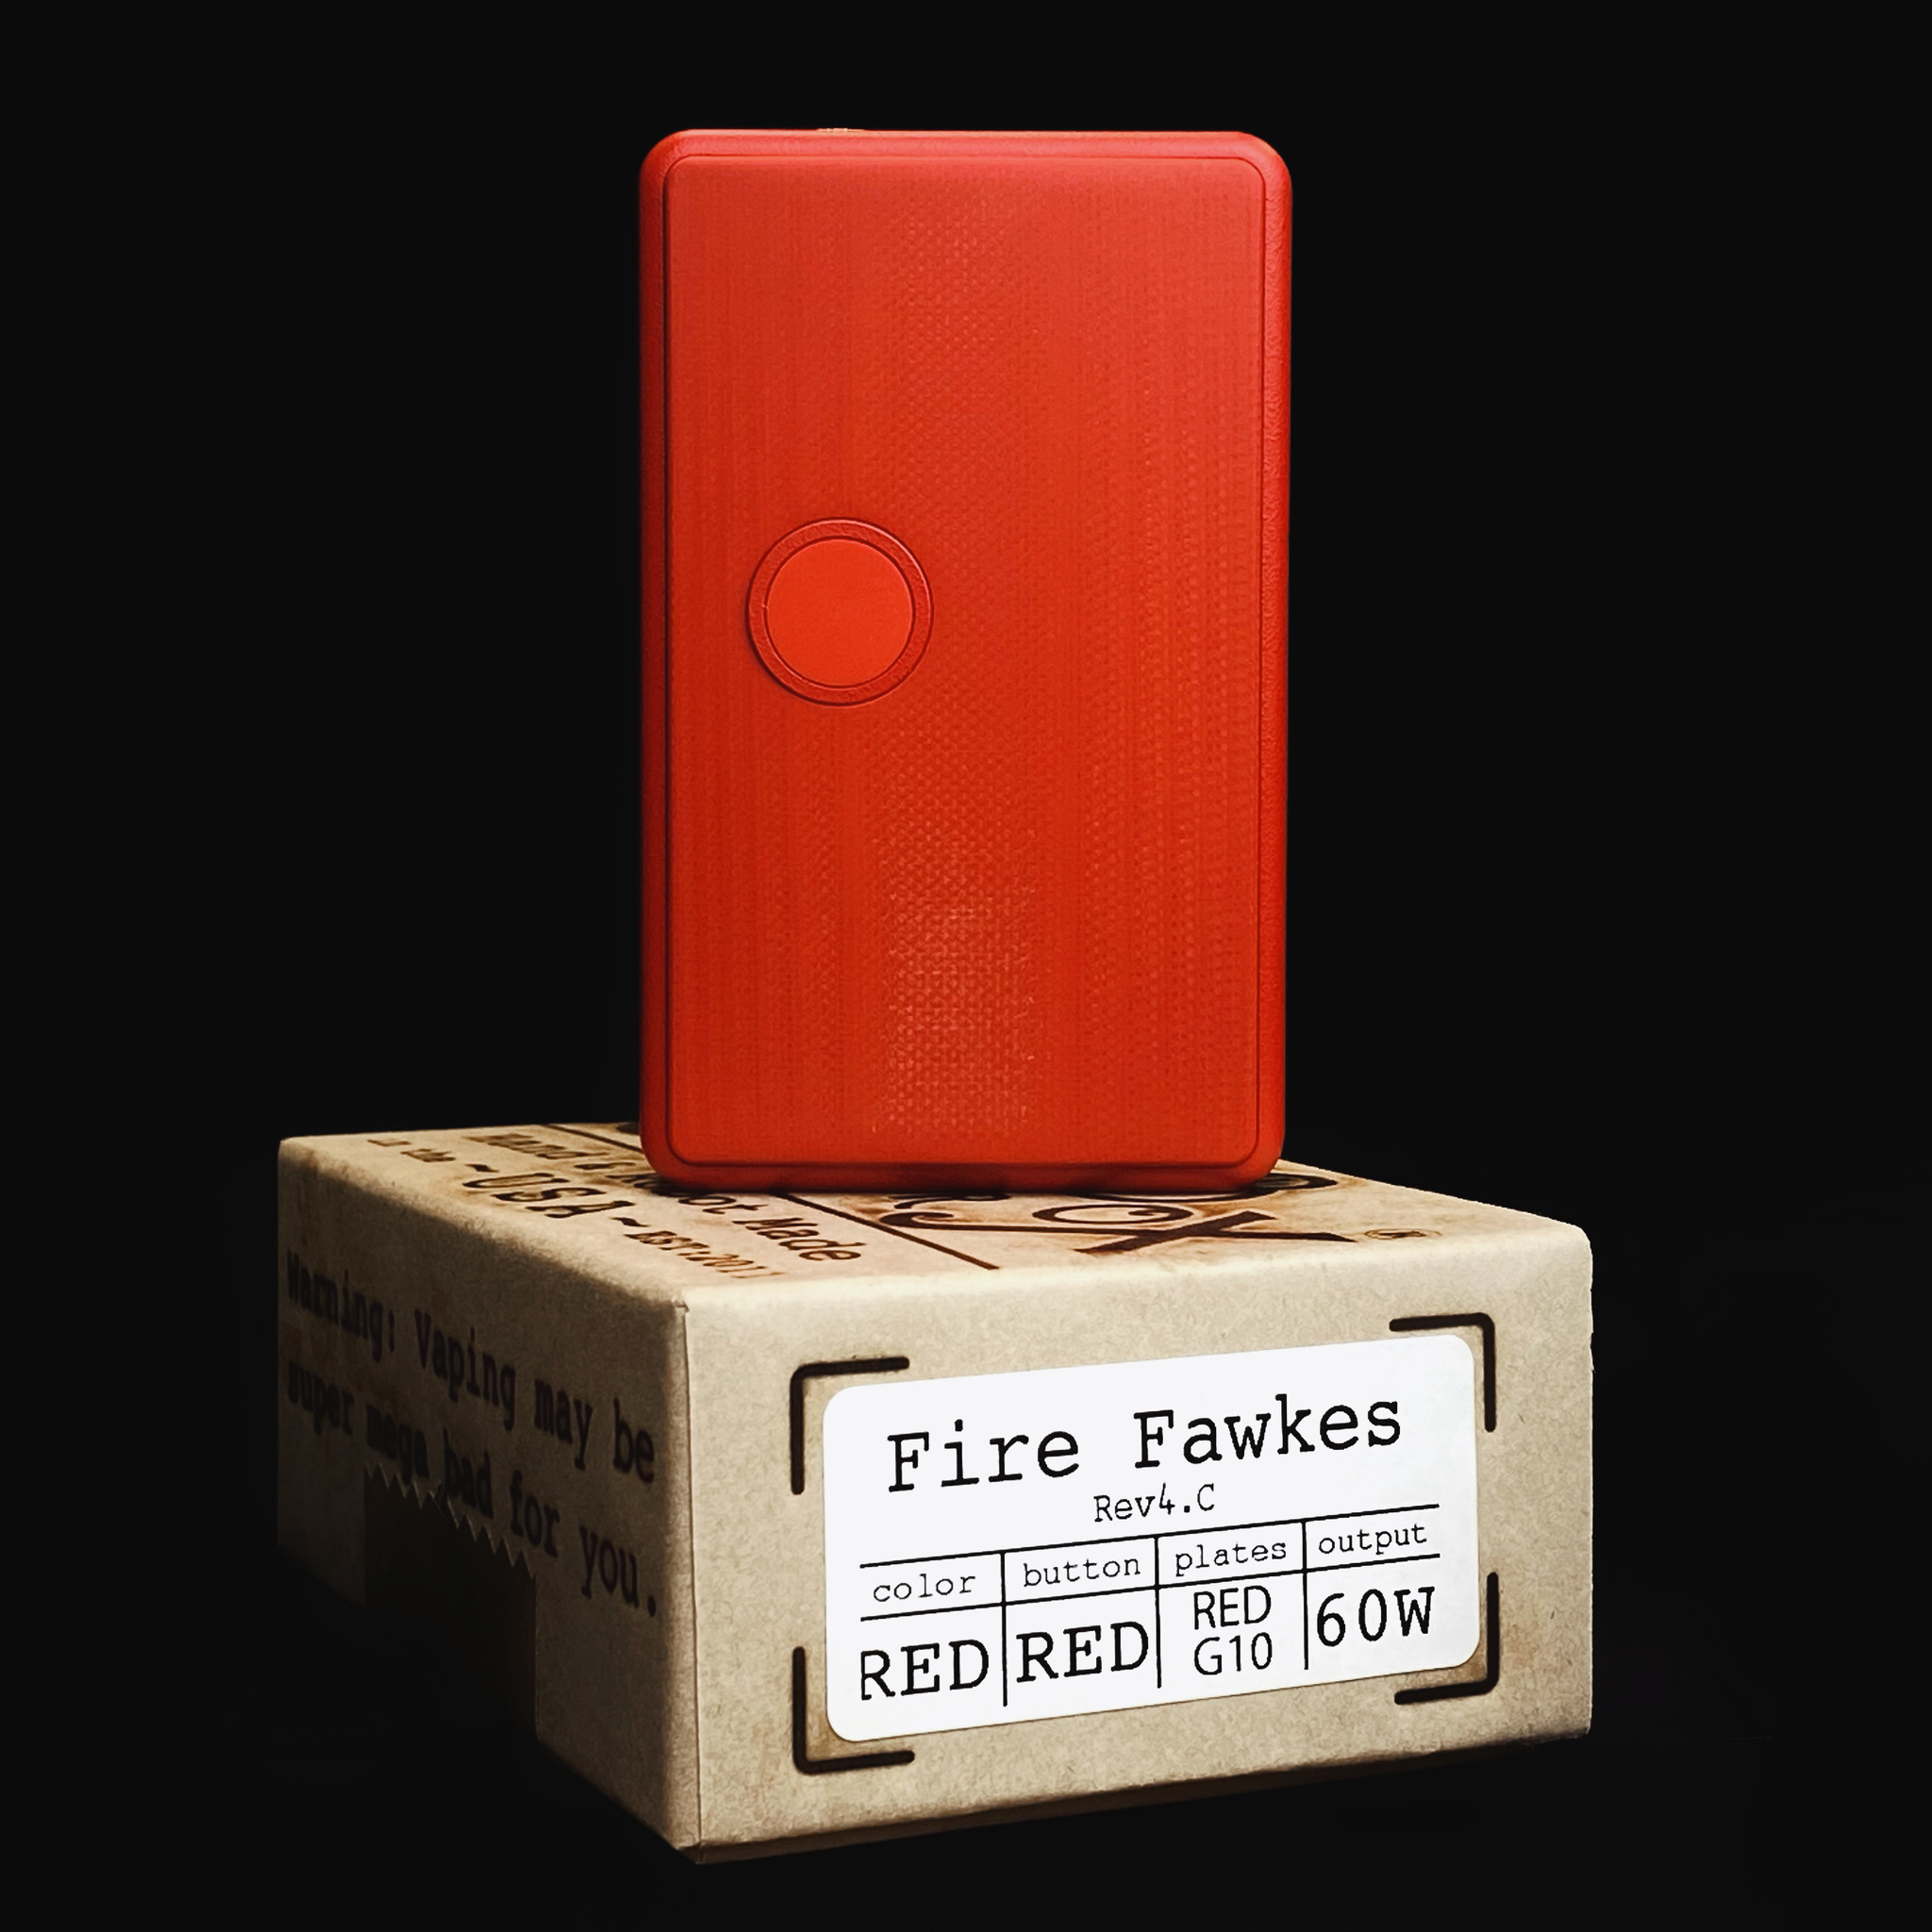 Billet Box Fire Fawkes by Billet Box Vapor | HATA V.S.O.P.